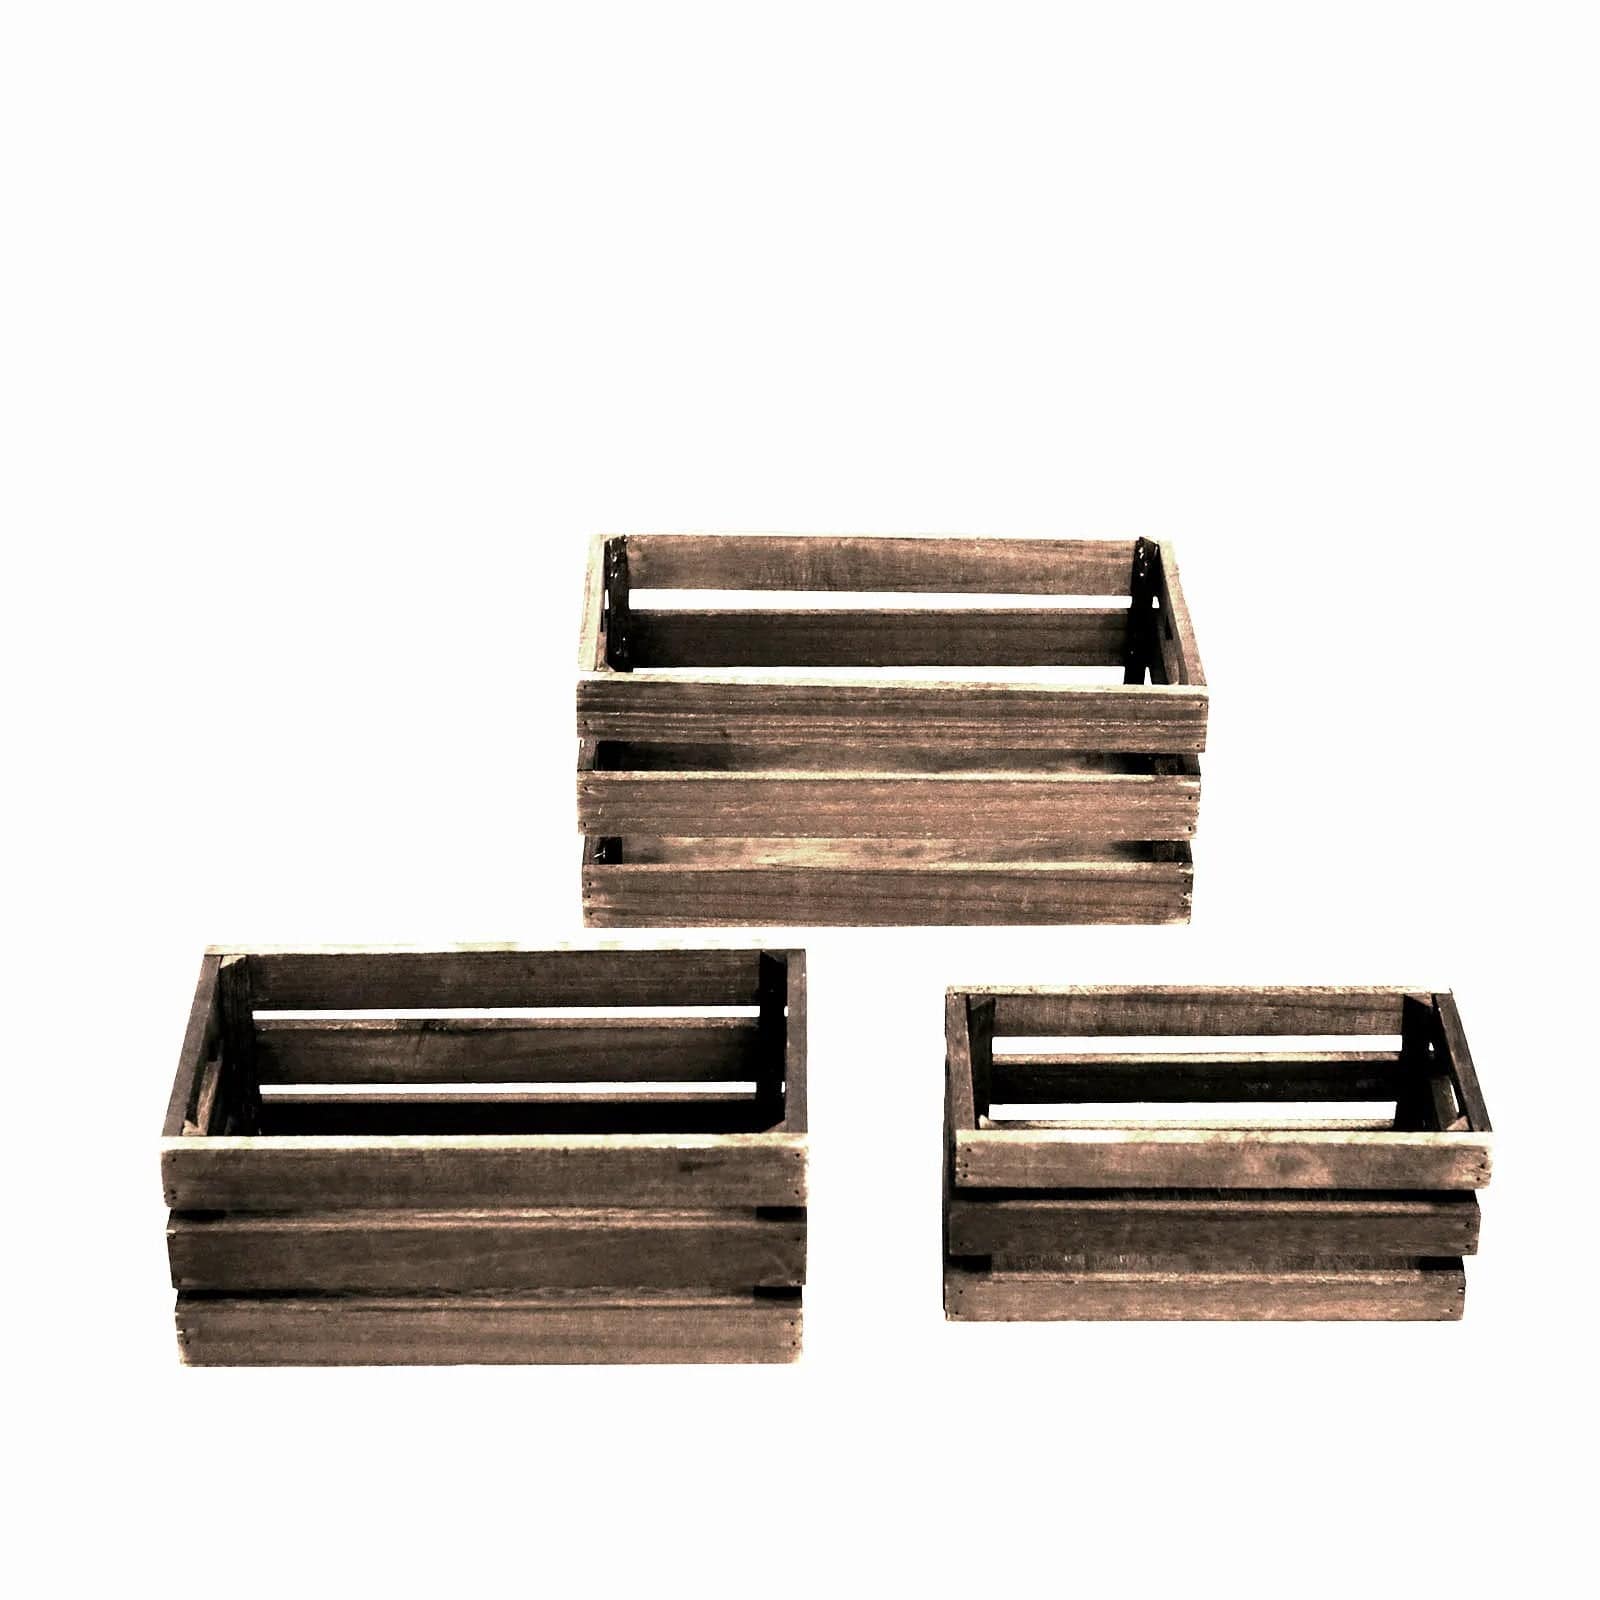 3 Dark Brown Rectangular Natural Wooden Crate Boxes Planter Holders